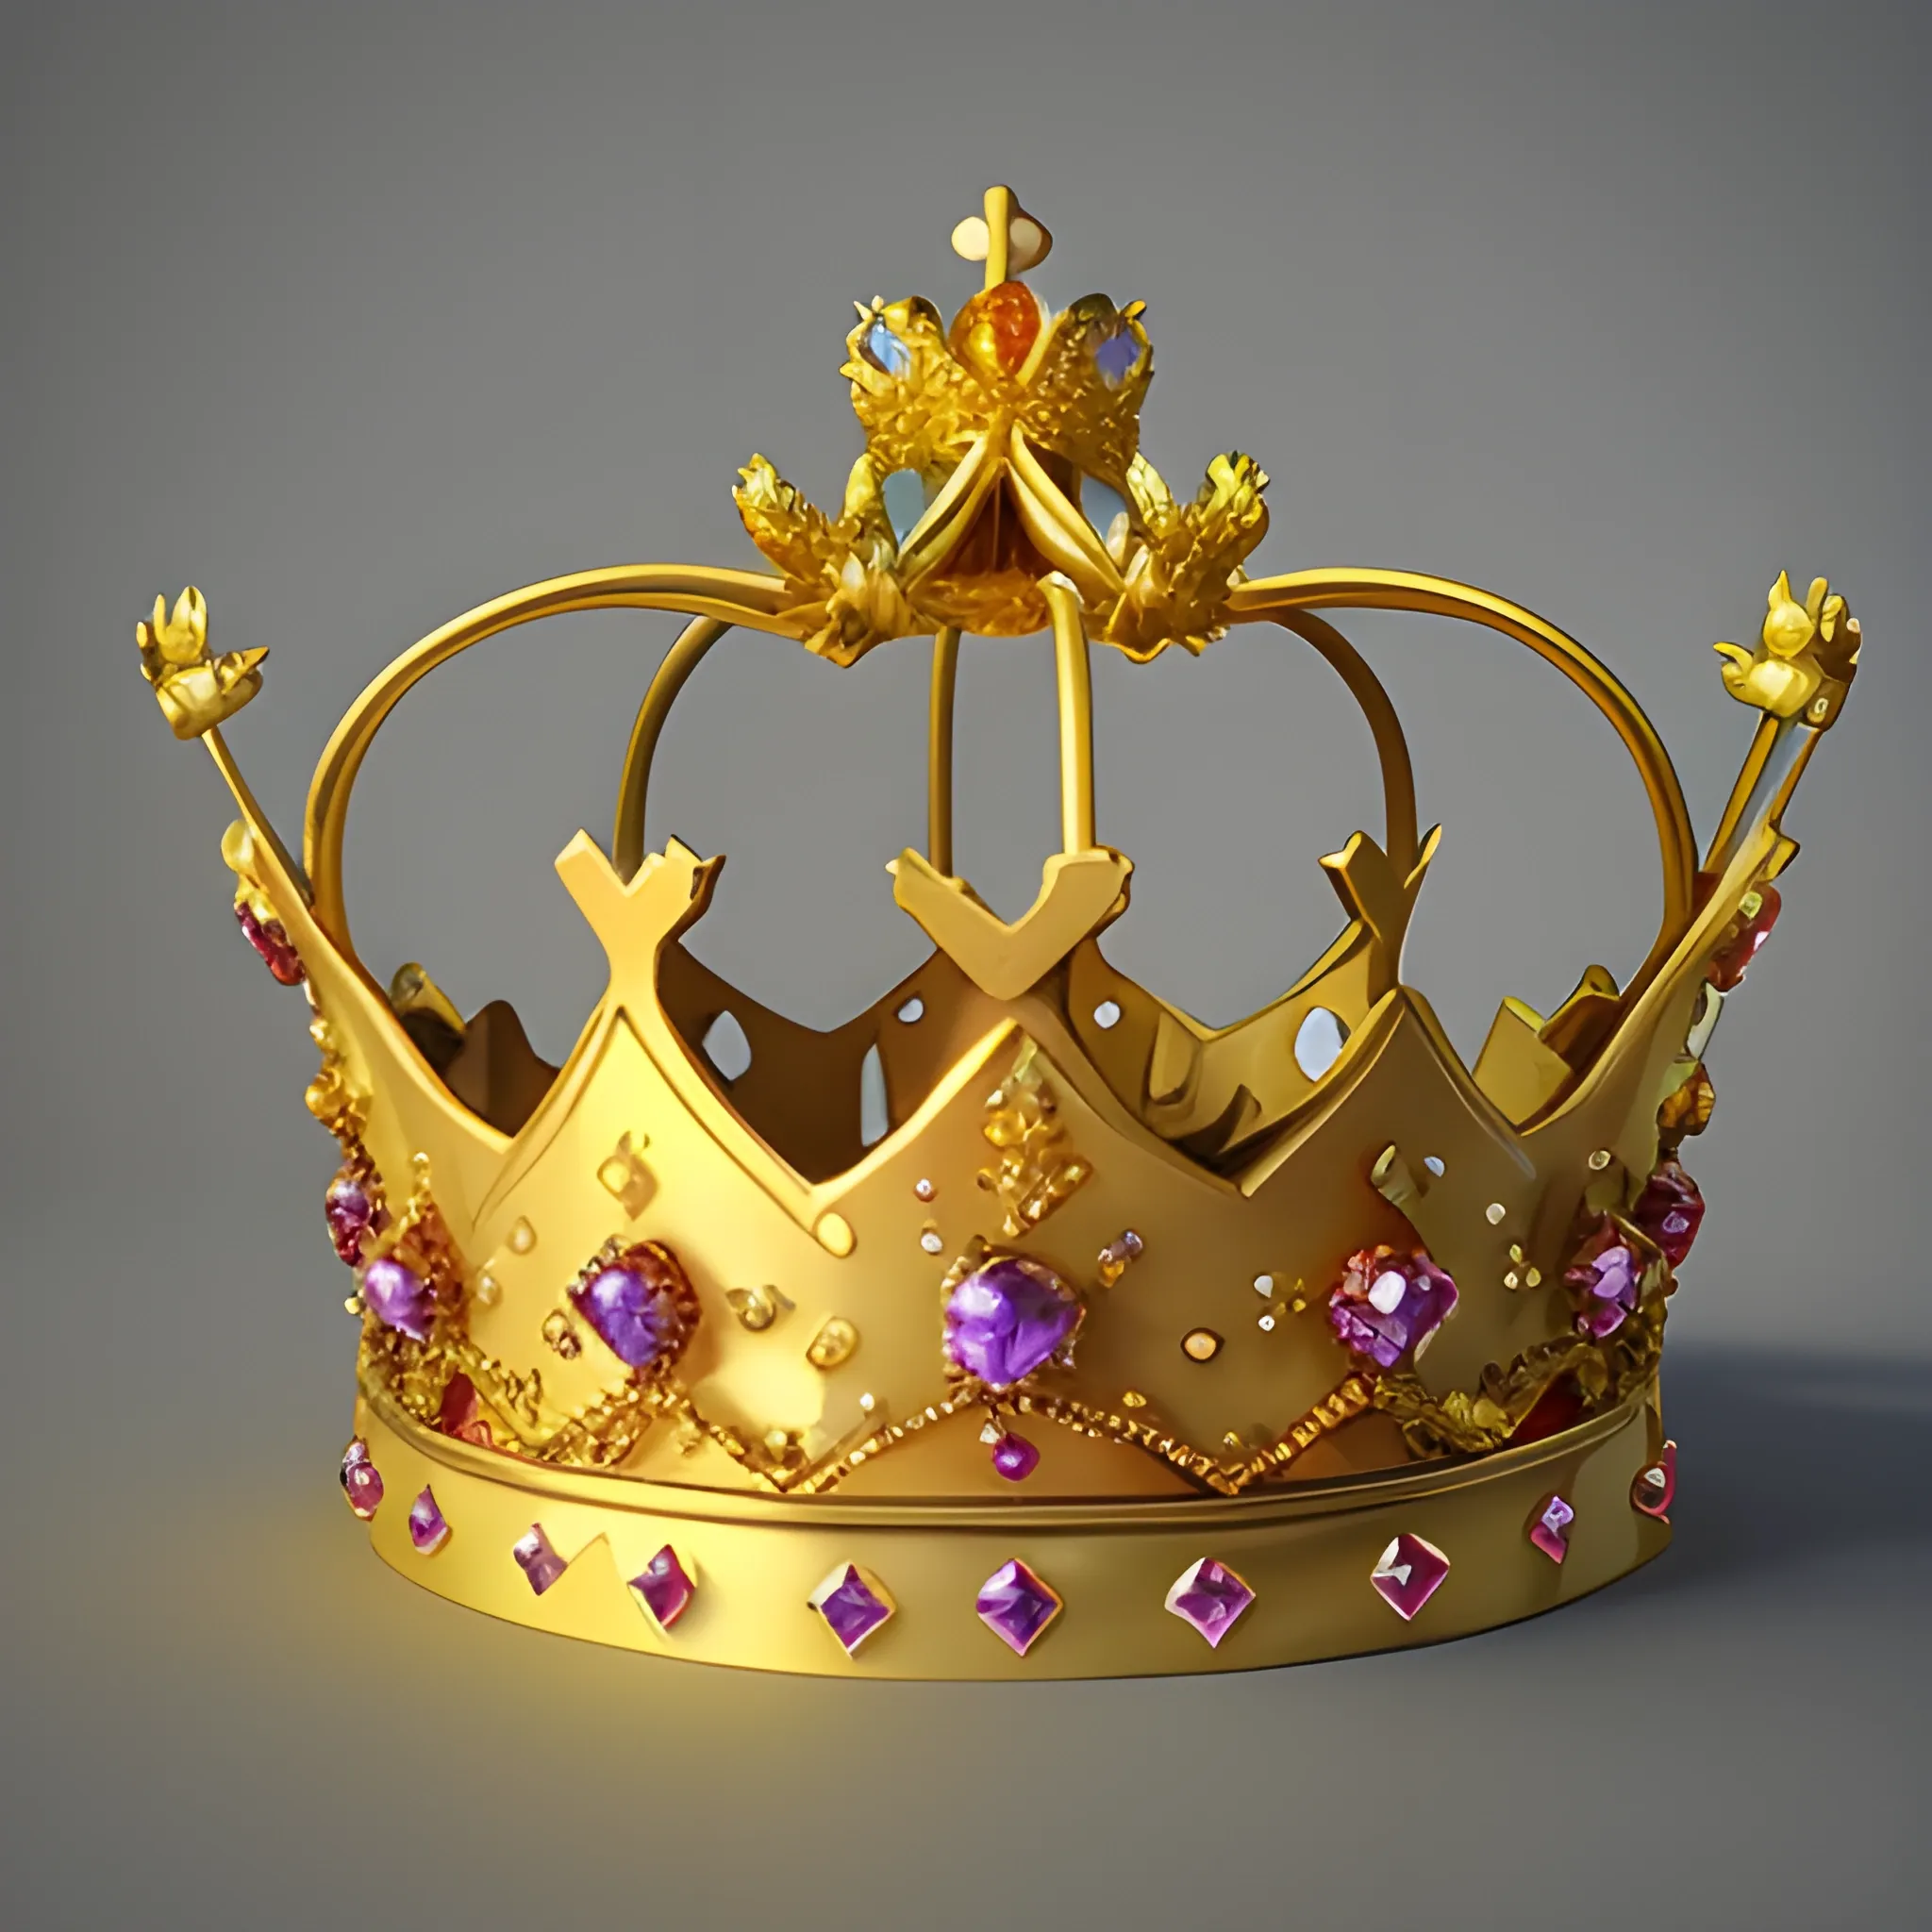 fantasy, hyper realistic, 3D, elegant, golden crown with gemstones